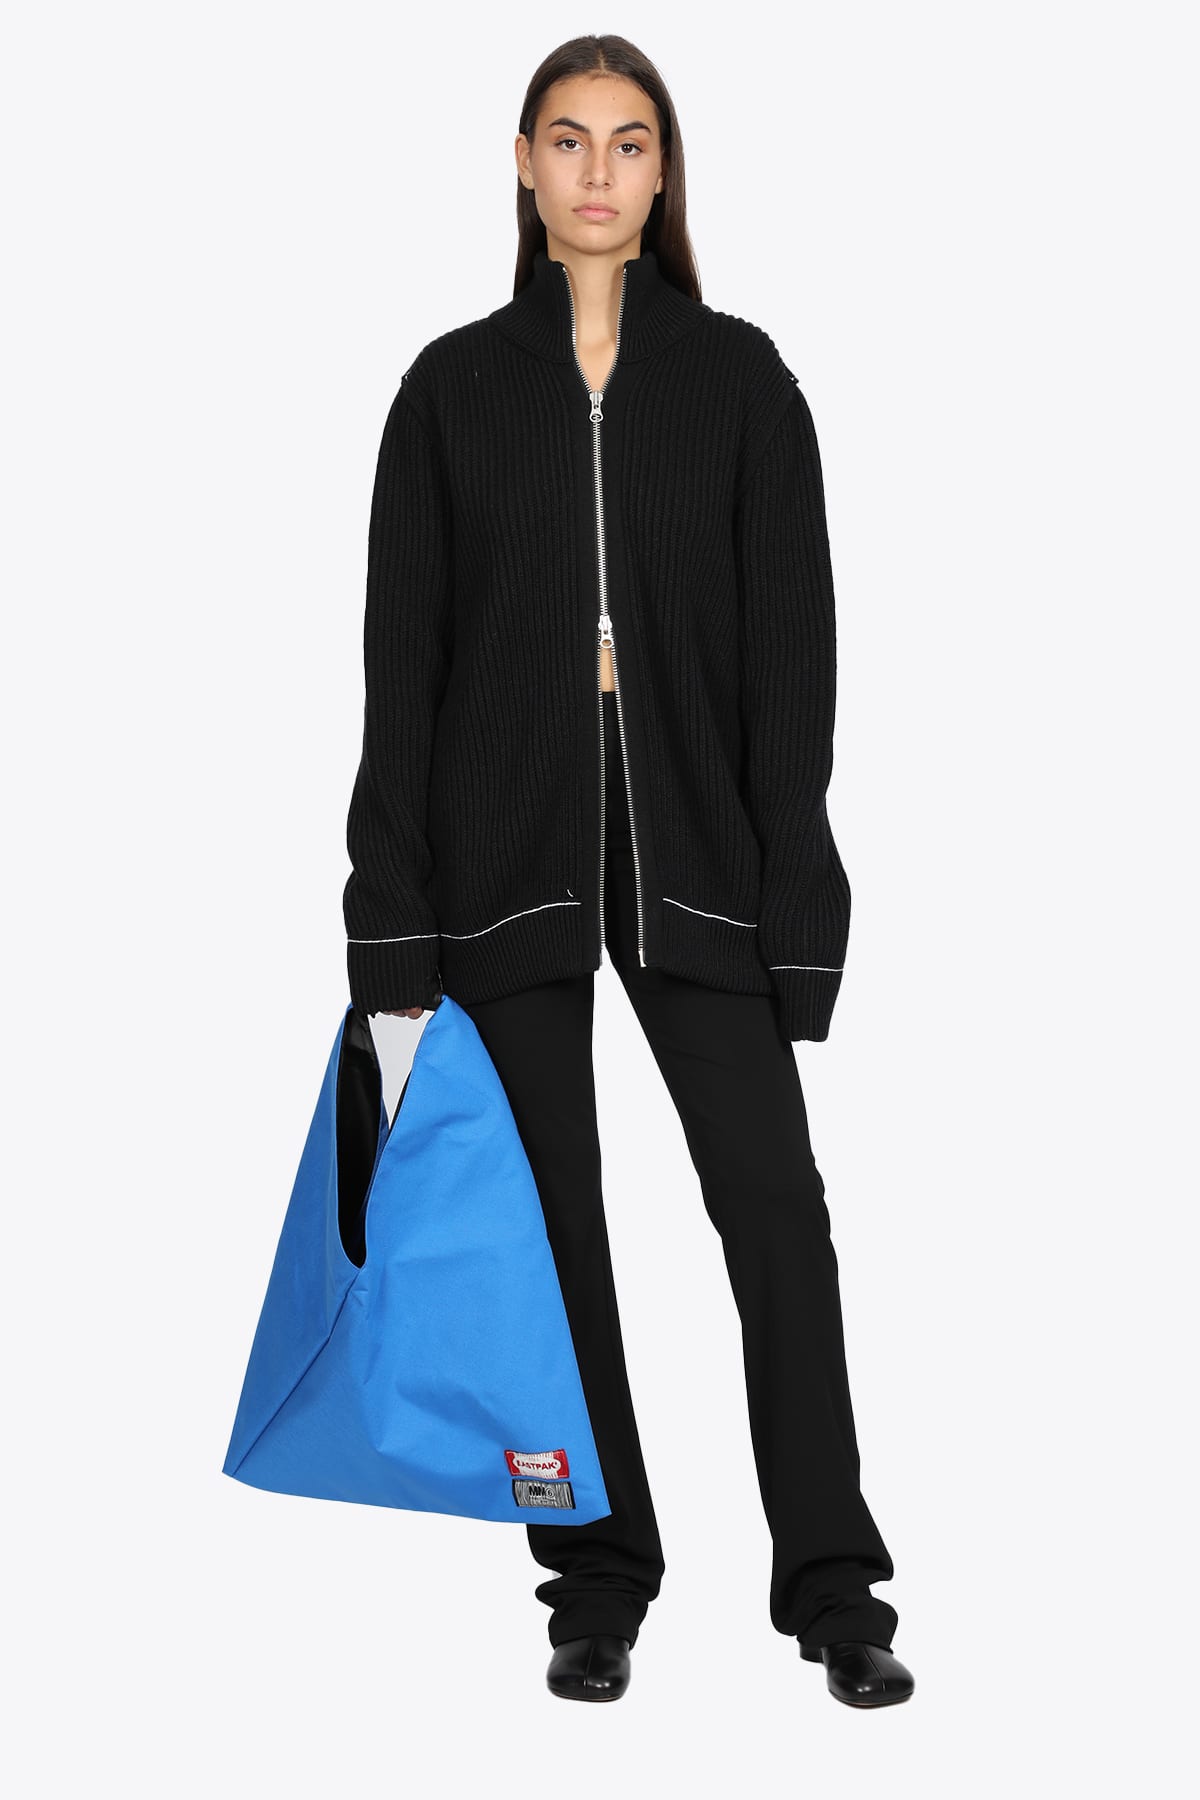 MM6 Maison Margiela Canvas Japanese Bag Blue nylon Japanese bag Eastpak collaboration